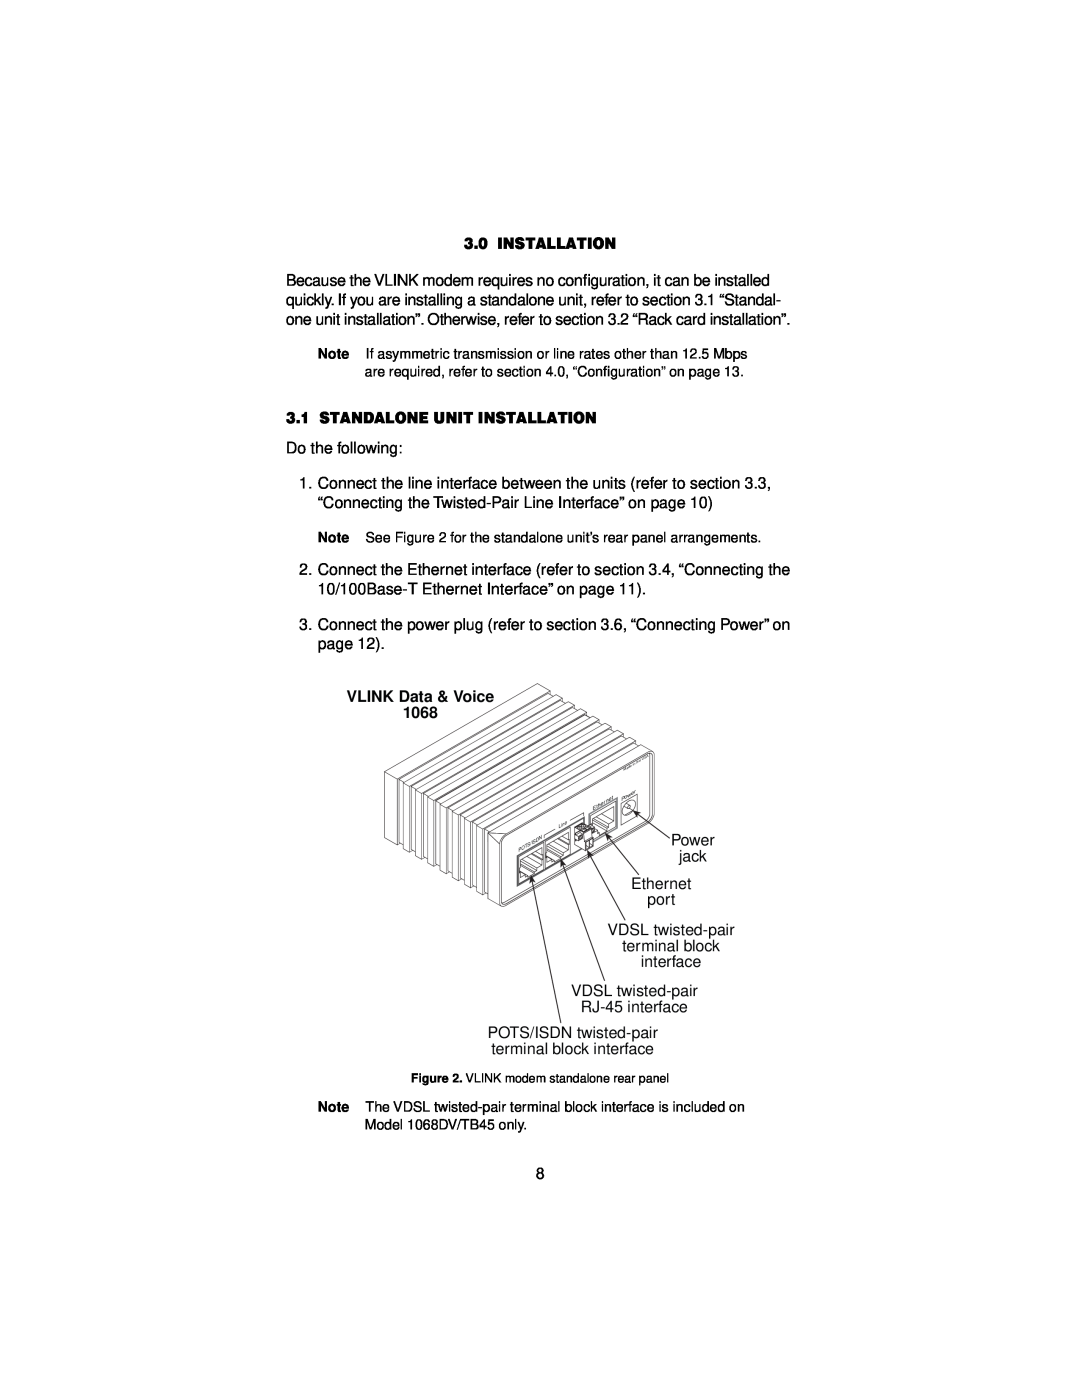 Patton electronic user manual Standalone Unit Installation, VLINK Data & Voice 1068 